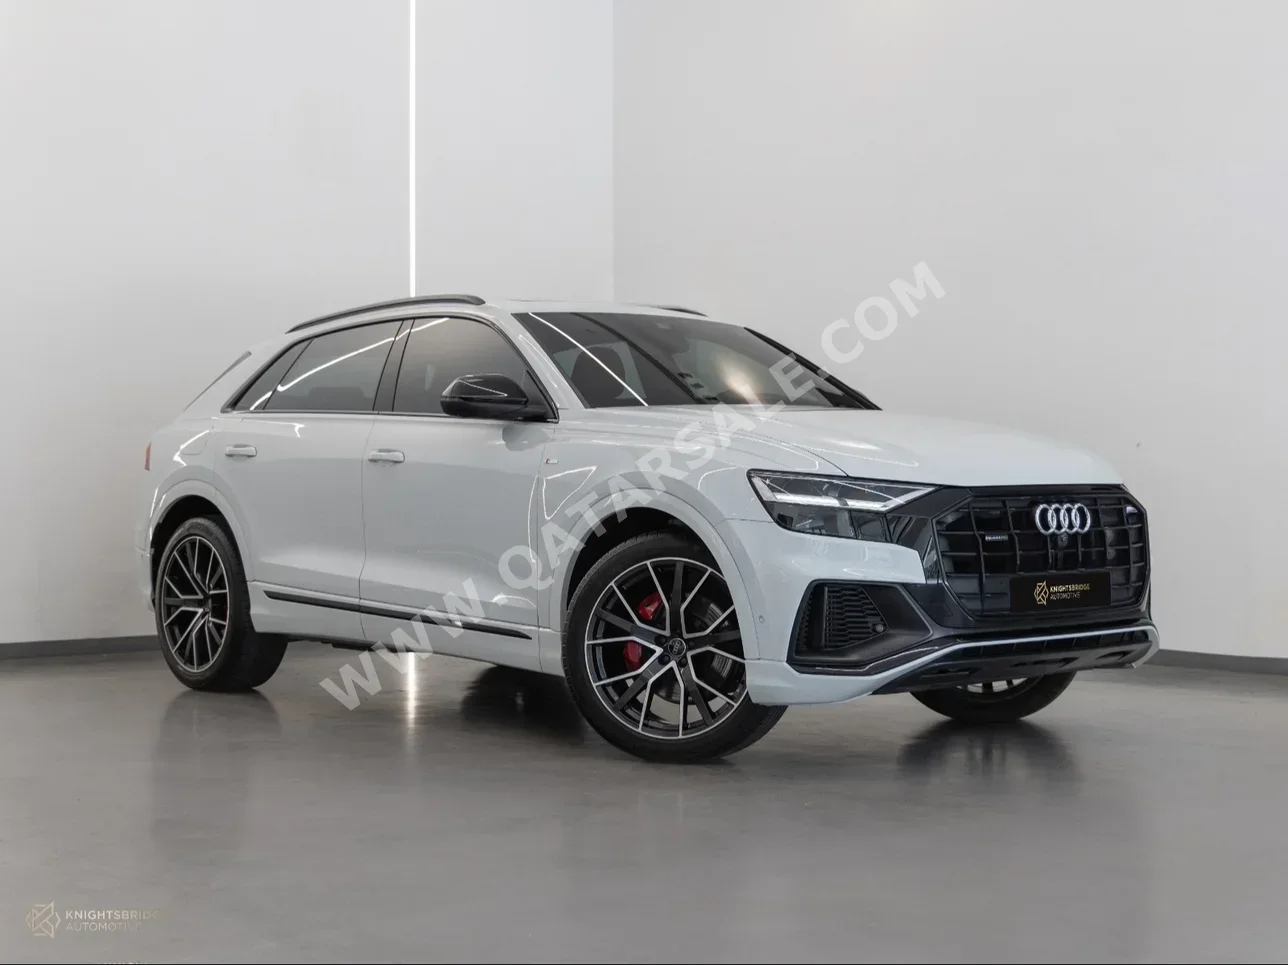 Audi  Q8  TFSI Quattro  2019  Automatic  58,250 Km  6 Cylinder  All Wheel Drive (AWD)  SUV  White